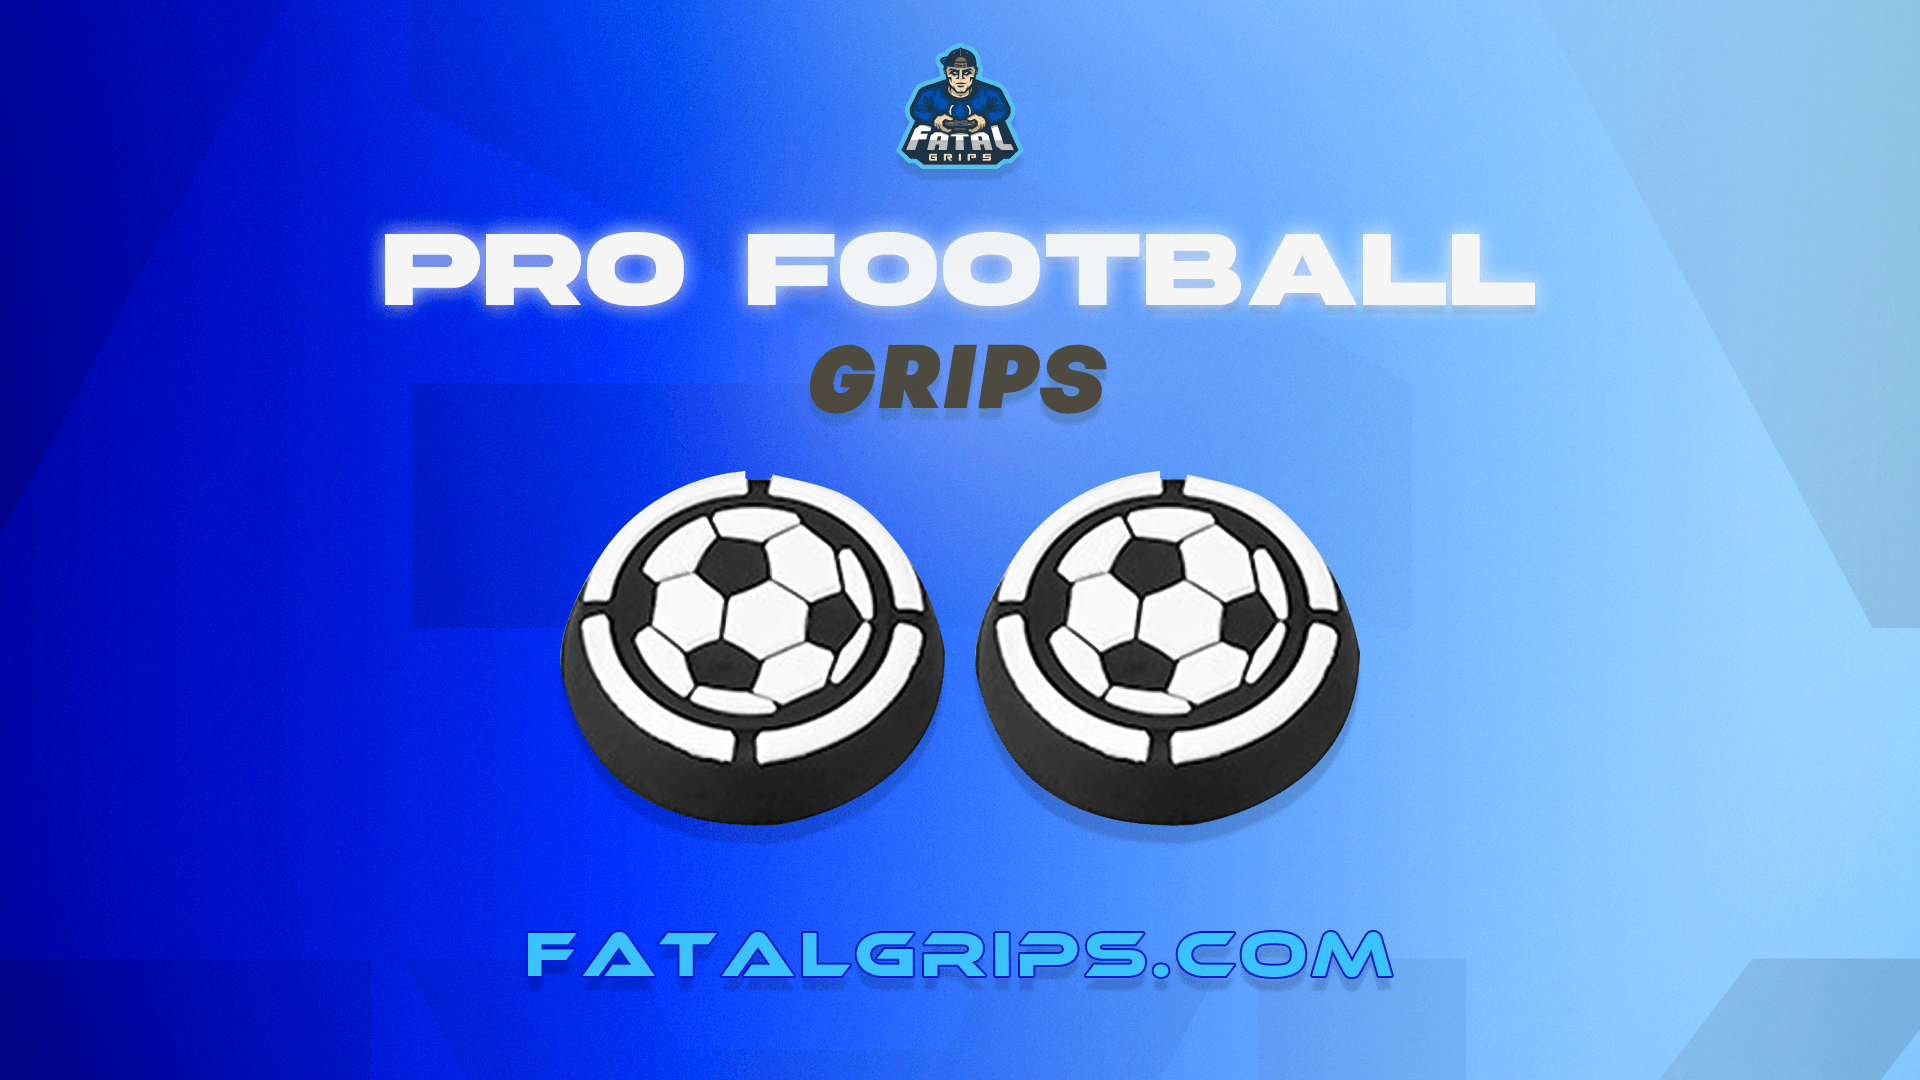 Pro Football Grips - Fatal Grips